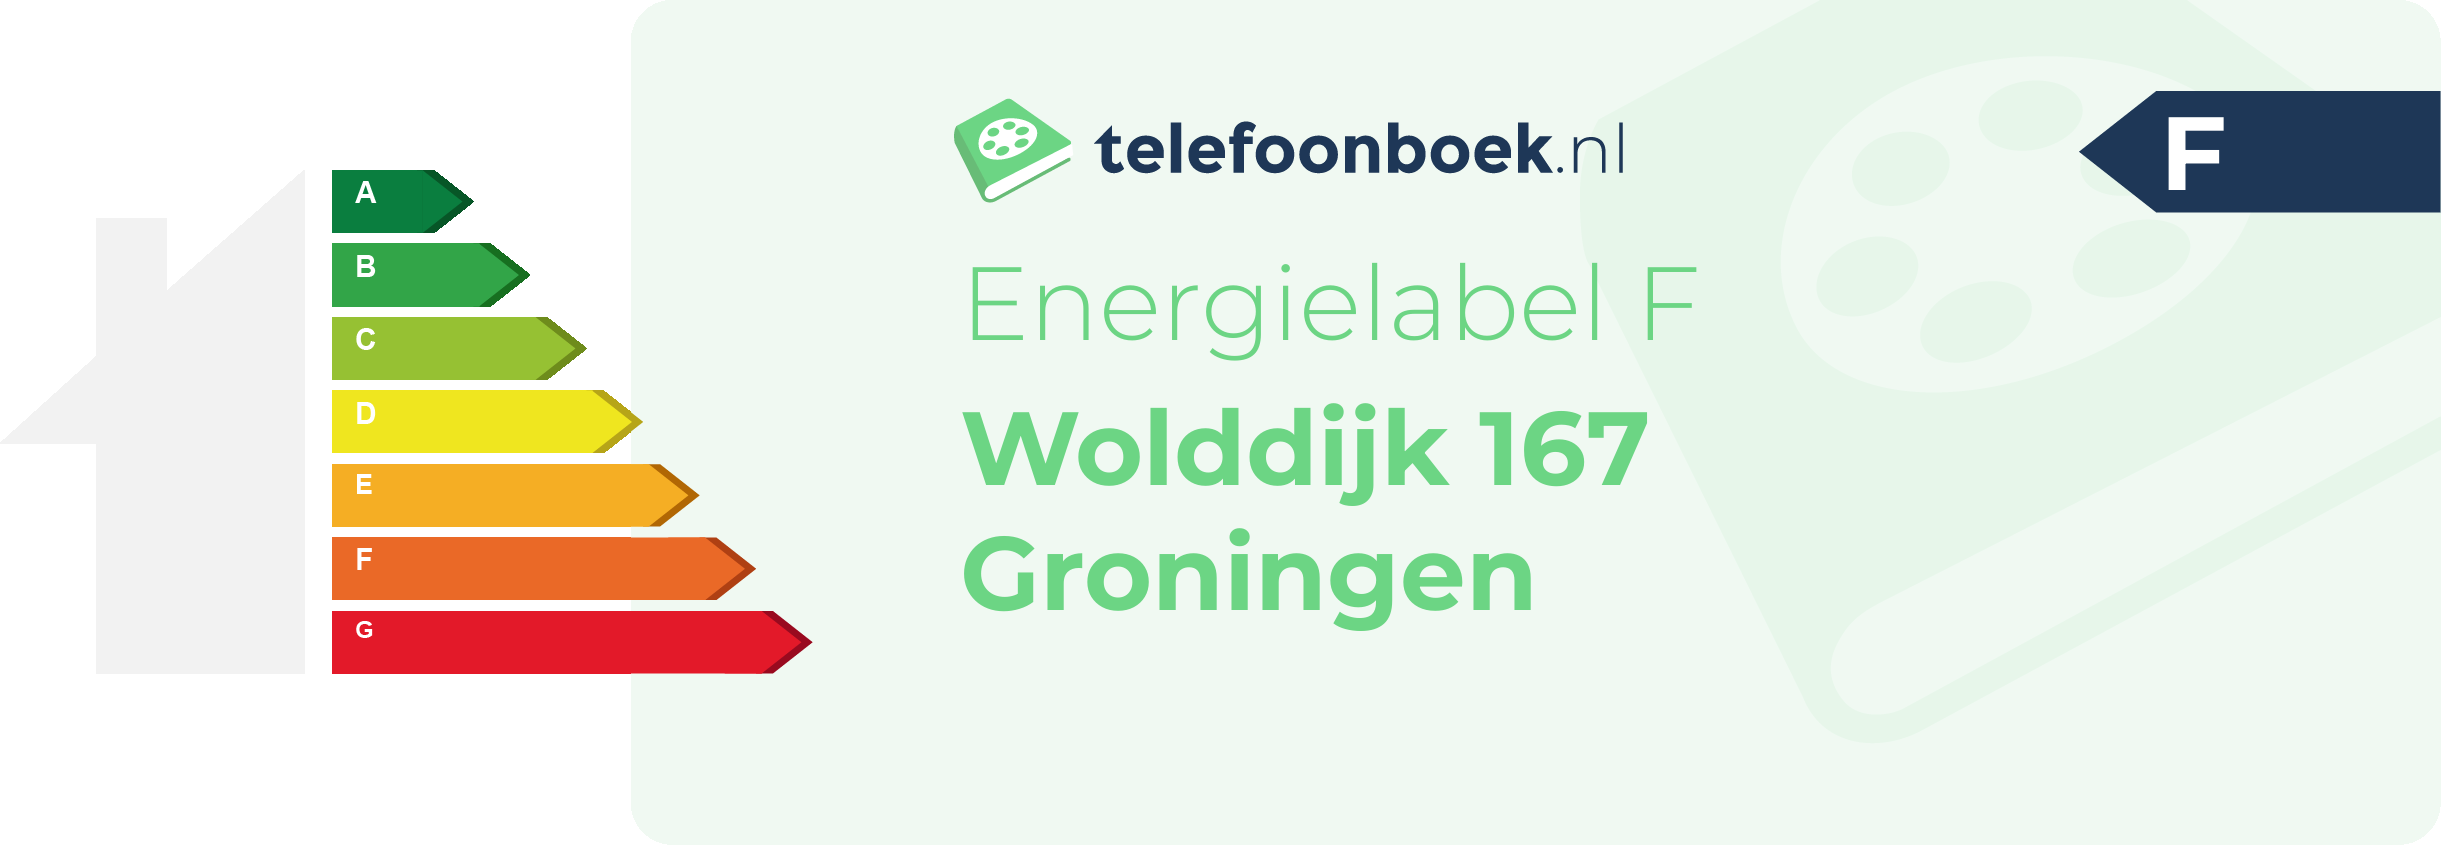 Energielabel Wolddijk 167 Groningen